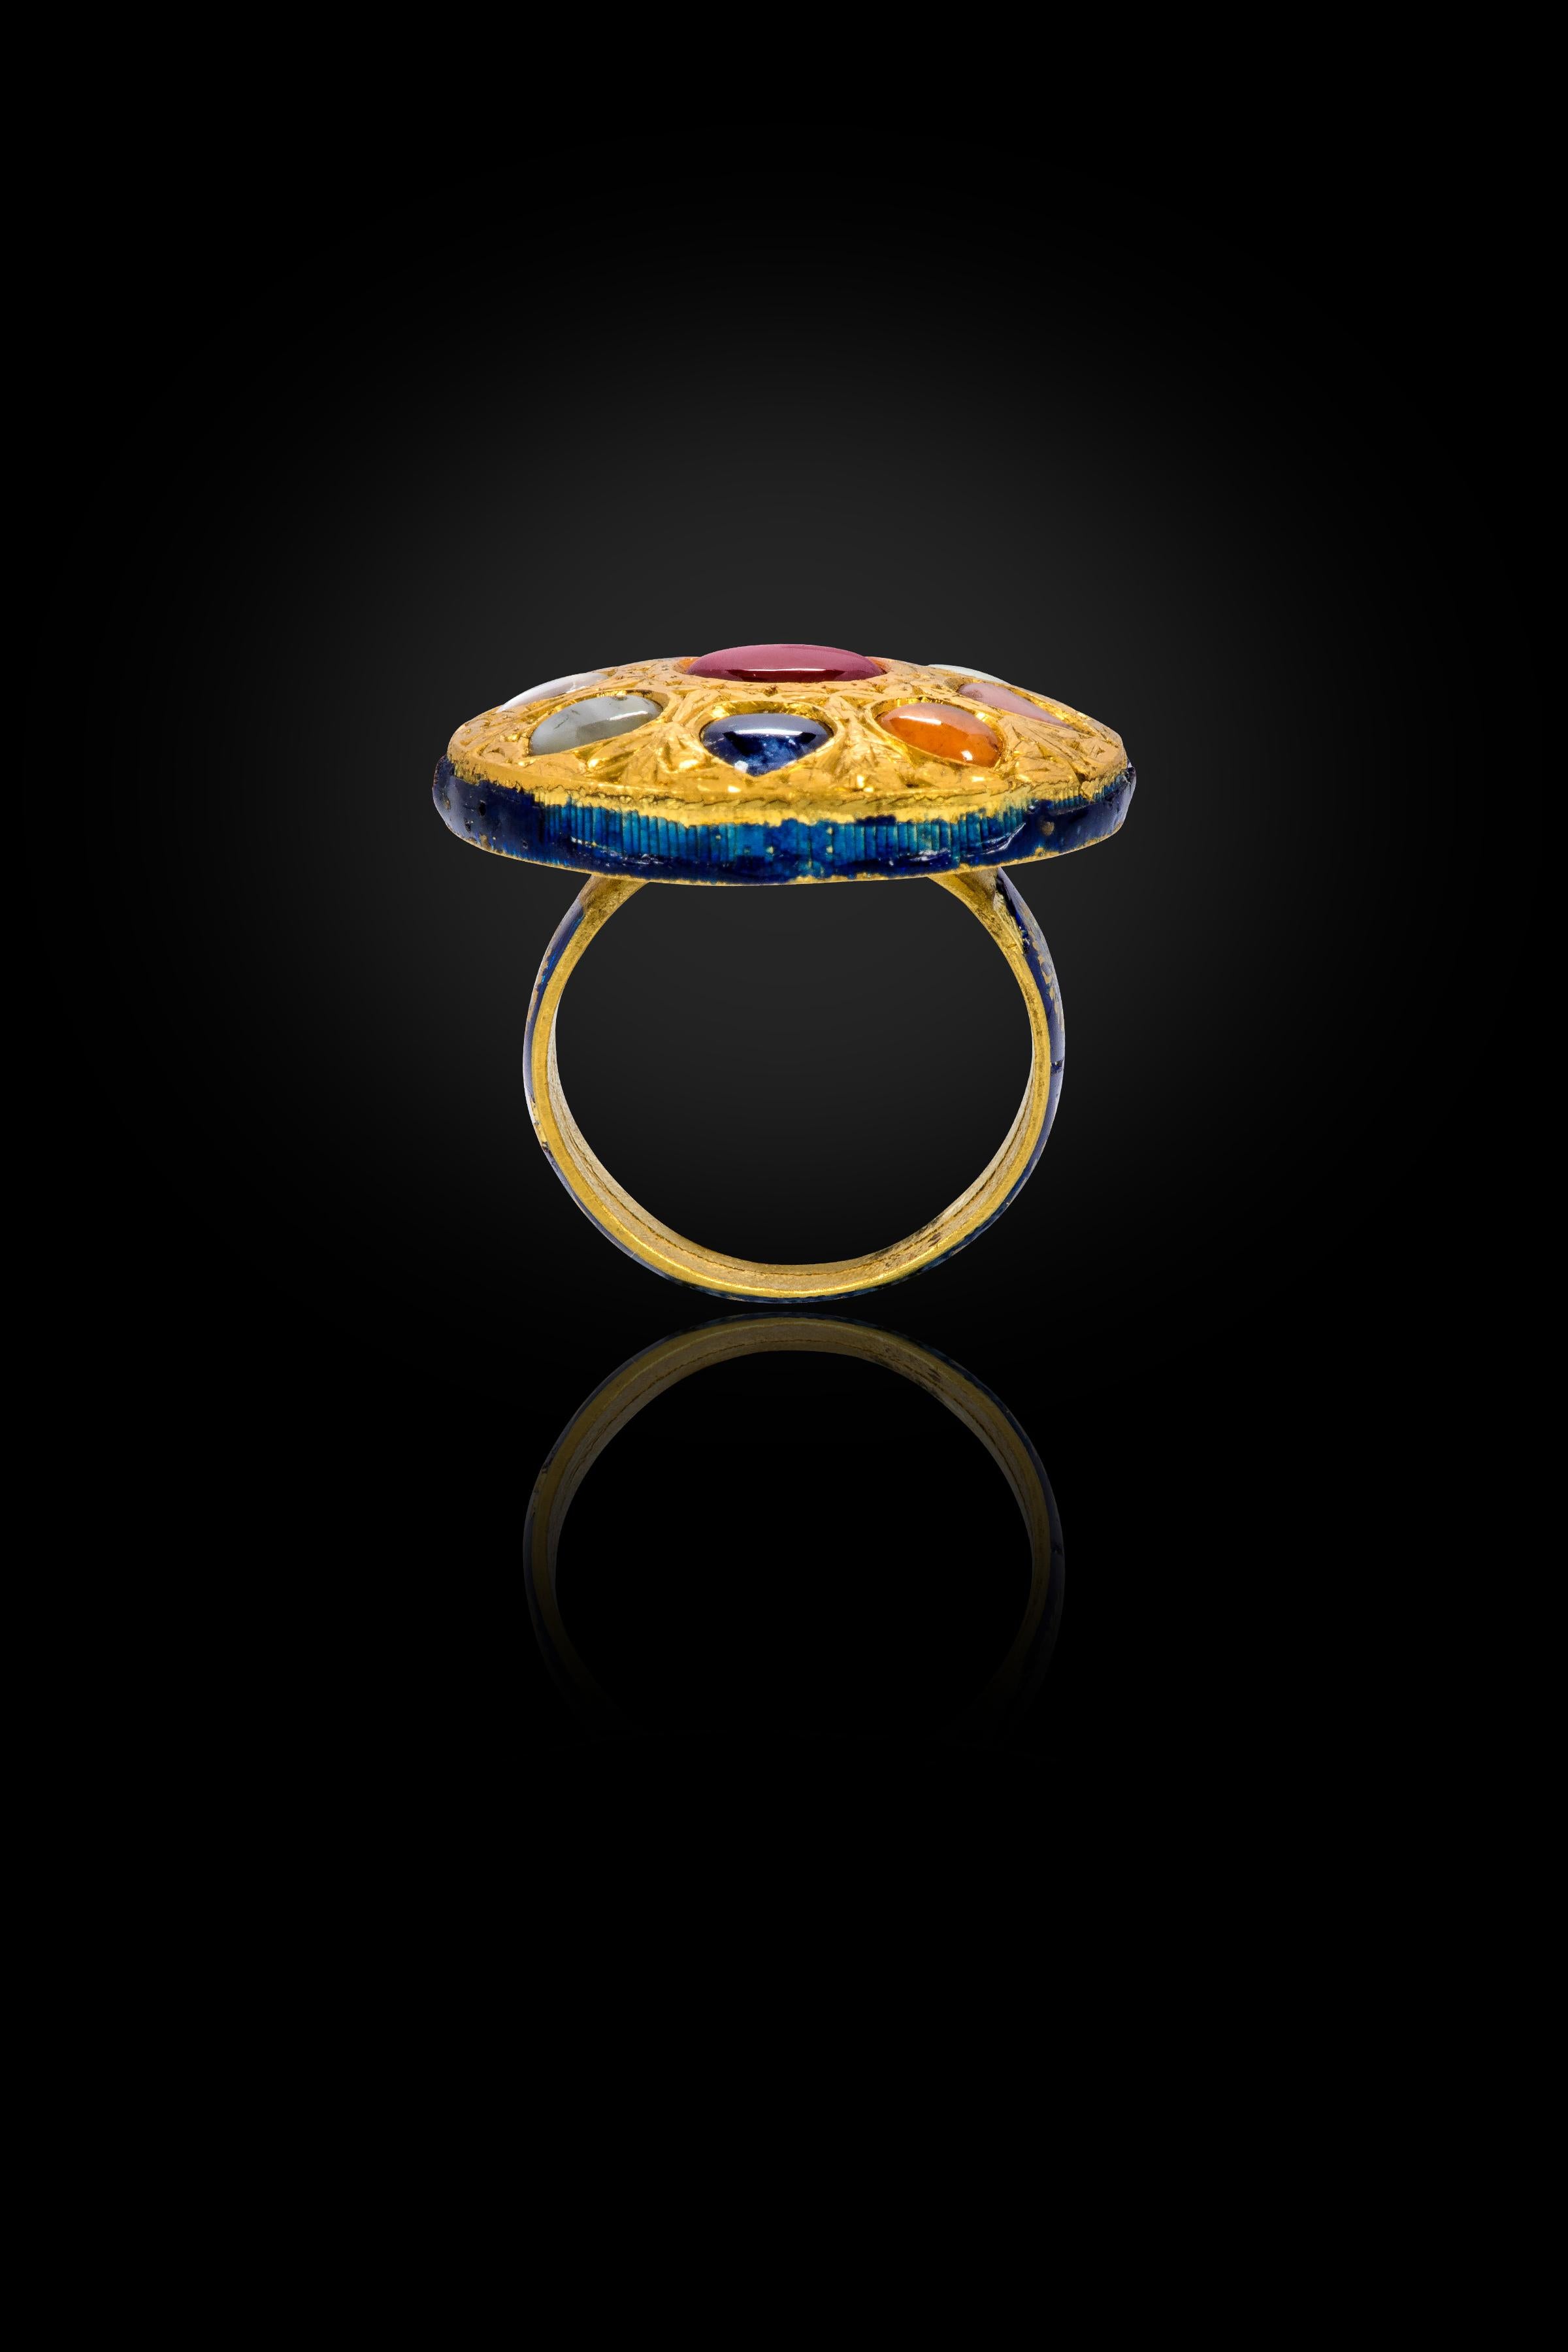 22 Karat Gold Nine Precious Gems Cocktail Ring with Blue Enamel Work For Sale 1